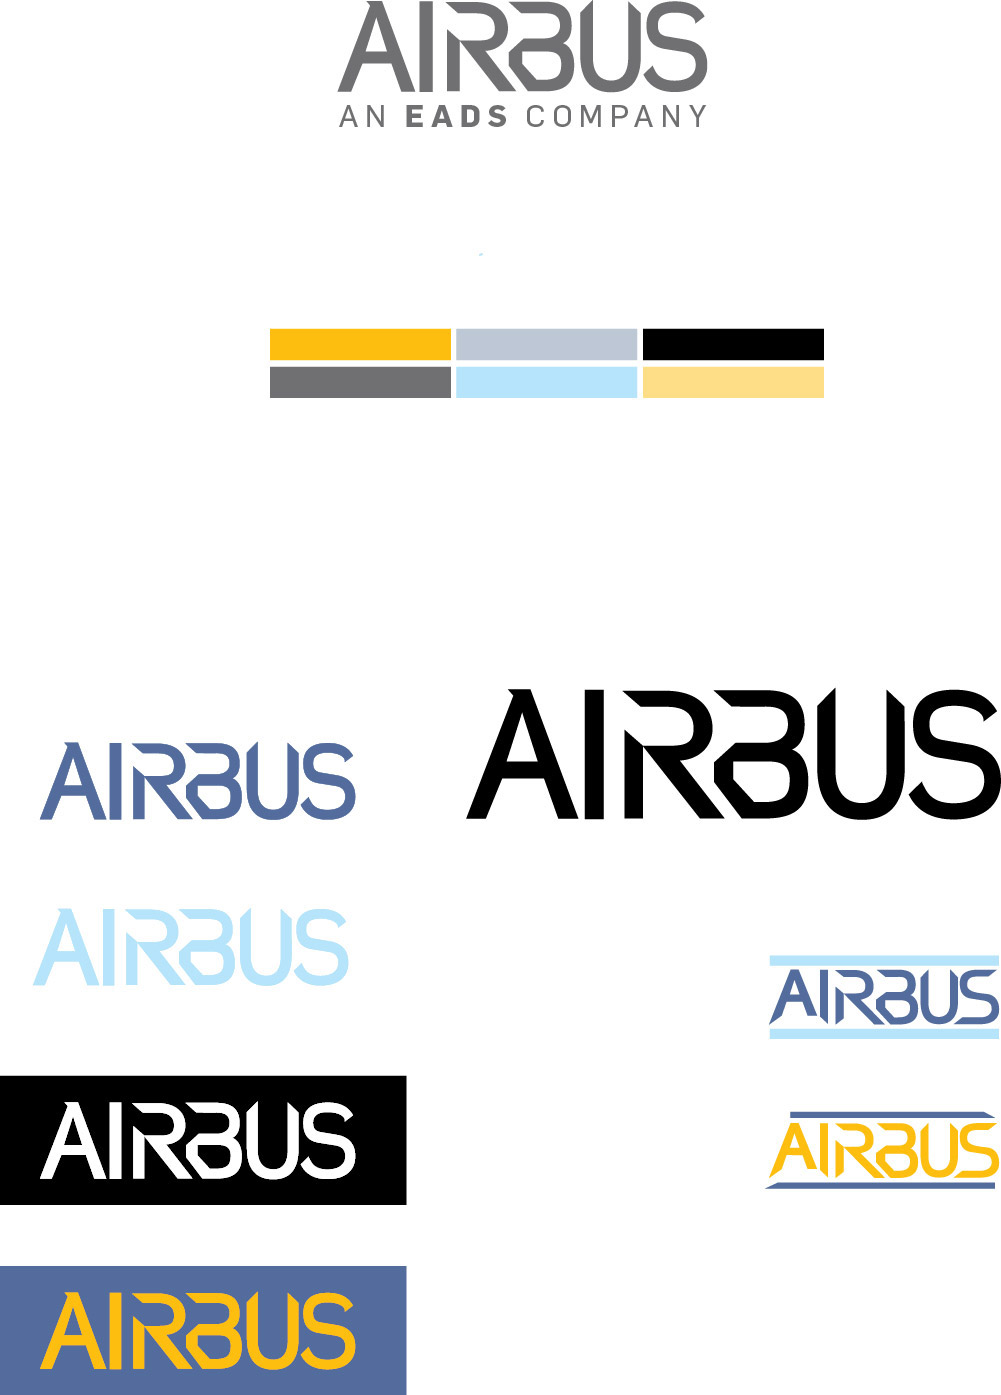 Airbus Airbus Industrie kelly harris rebranding brand refresh airplane design Identity Design brand guidelines applications